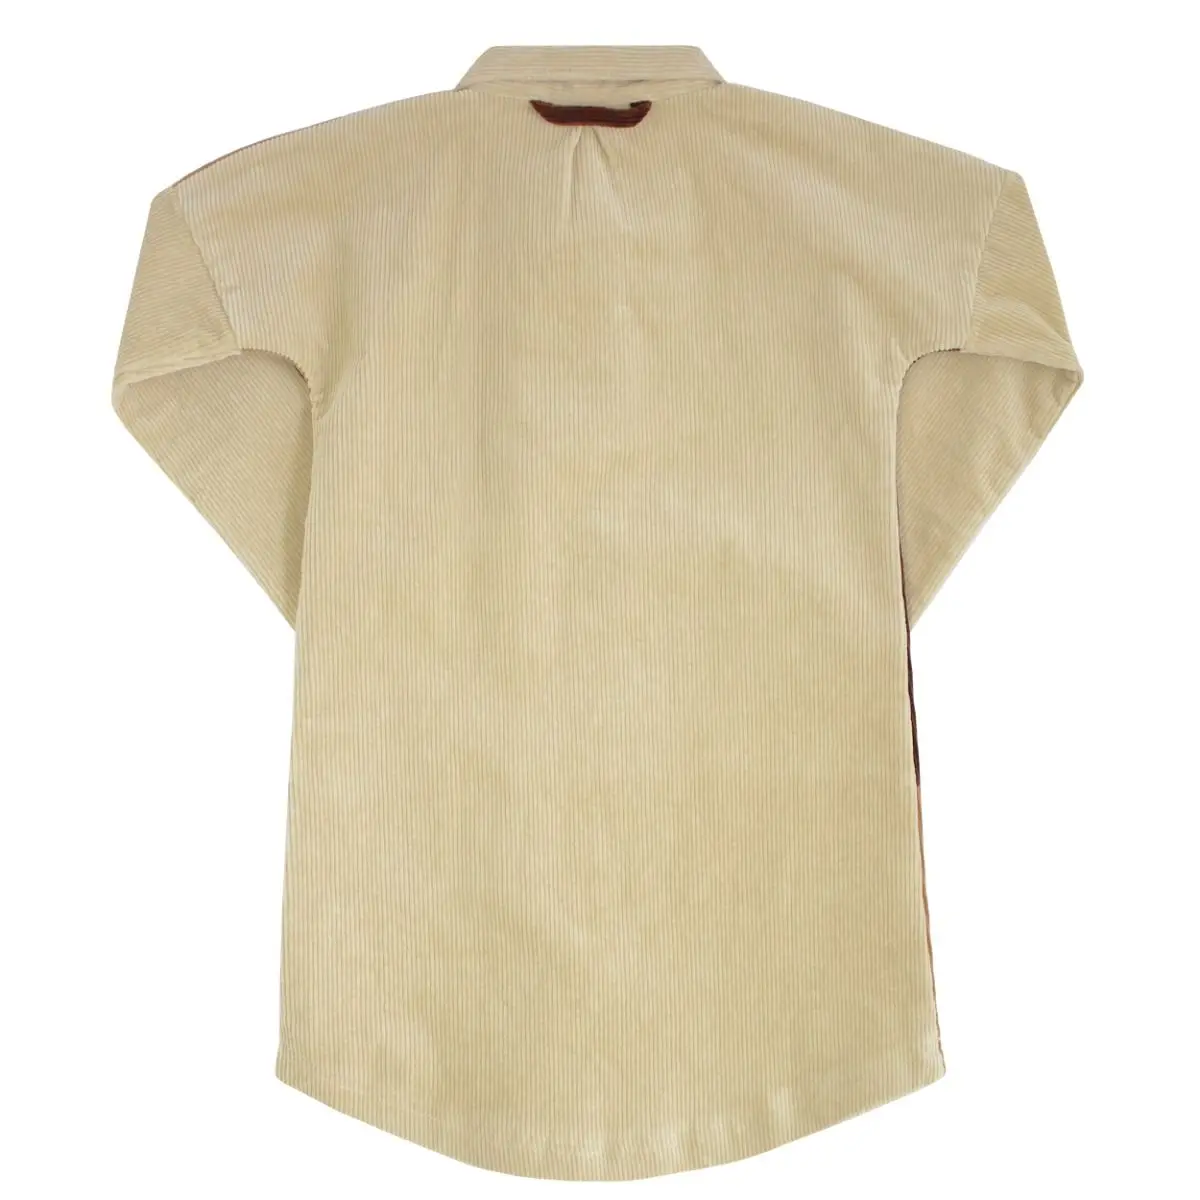 Custom oversize kids dresses shirt sample for girls of 10-11 yrs contrast color 100% cotton corduroy girls dresses kids